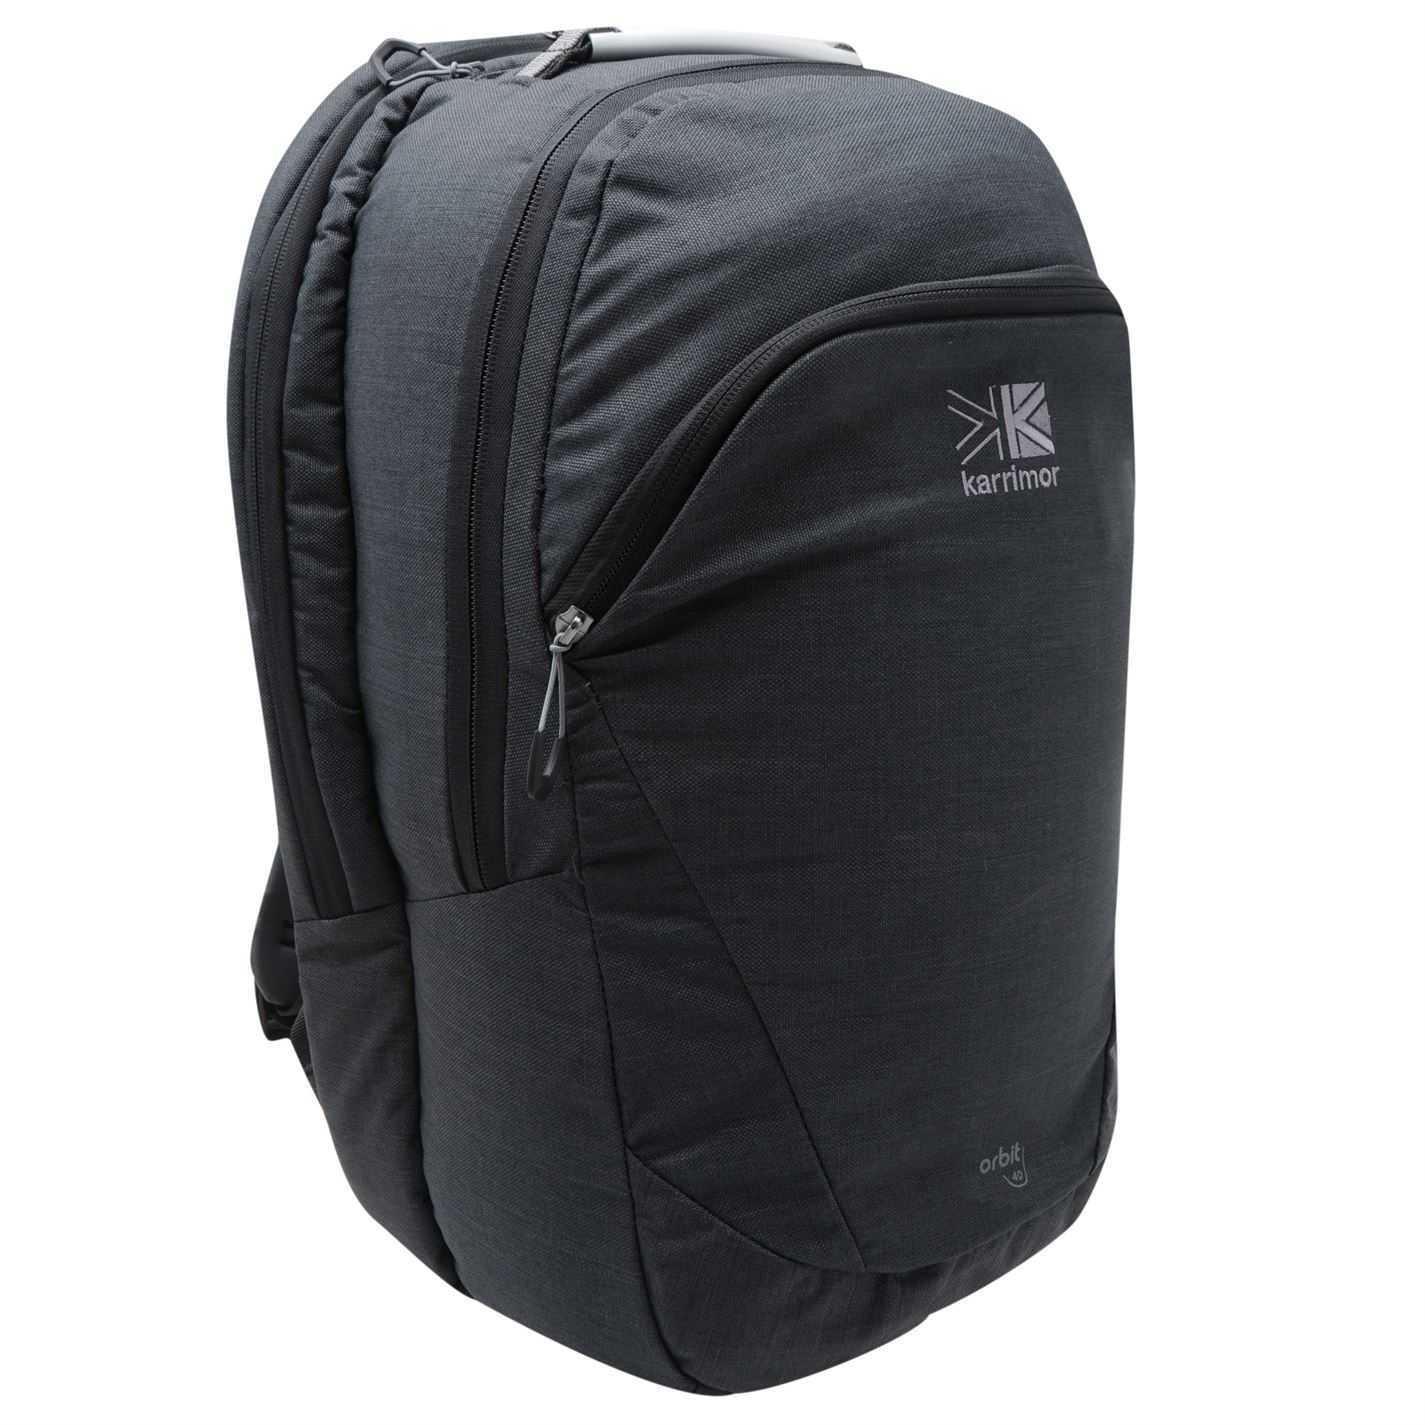 Rucsac Karrimor Orbit 40 Rucksack Travel Packs Backpack Luggage